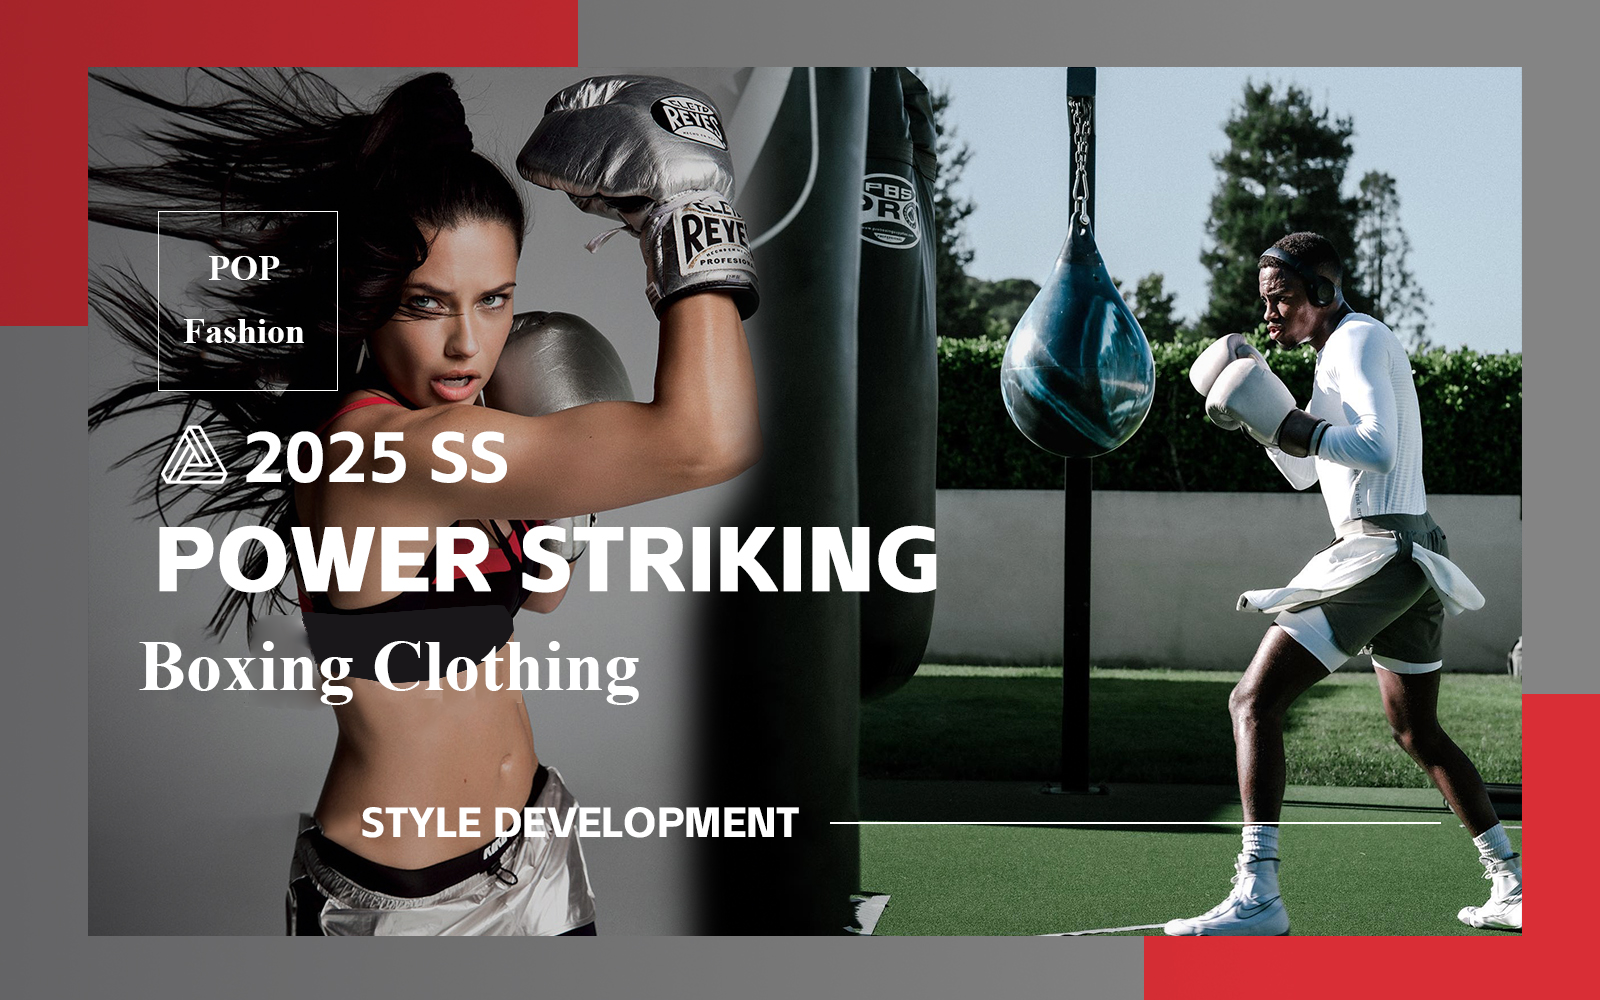 Power Striking -- The Design Development of Boxing & Training Clothing